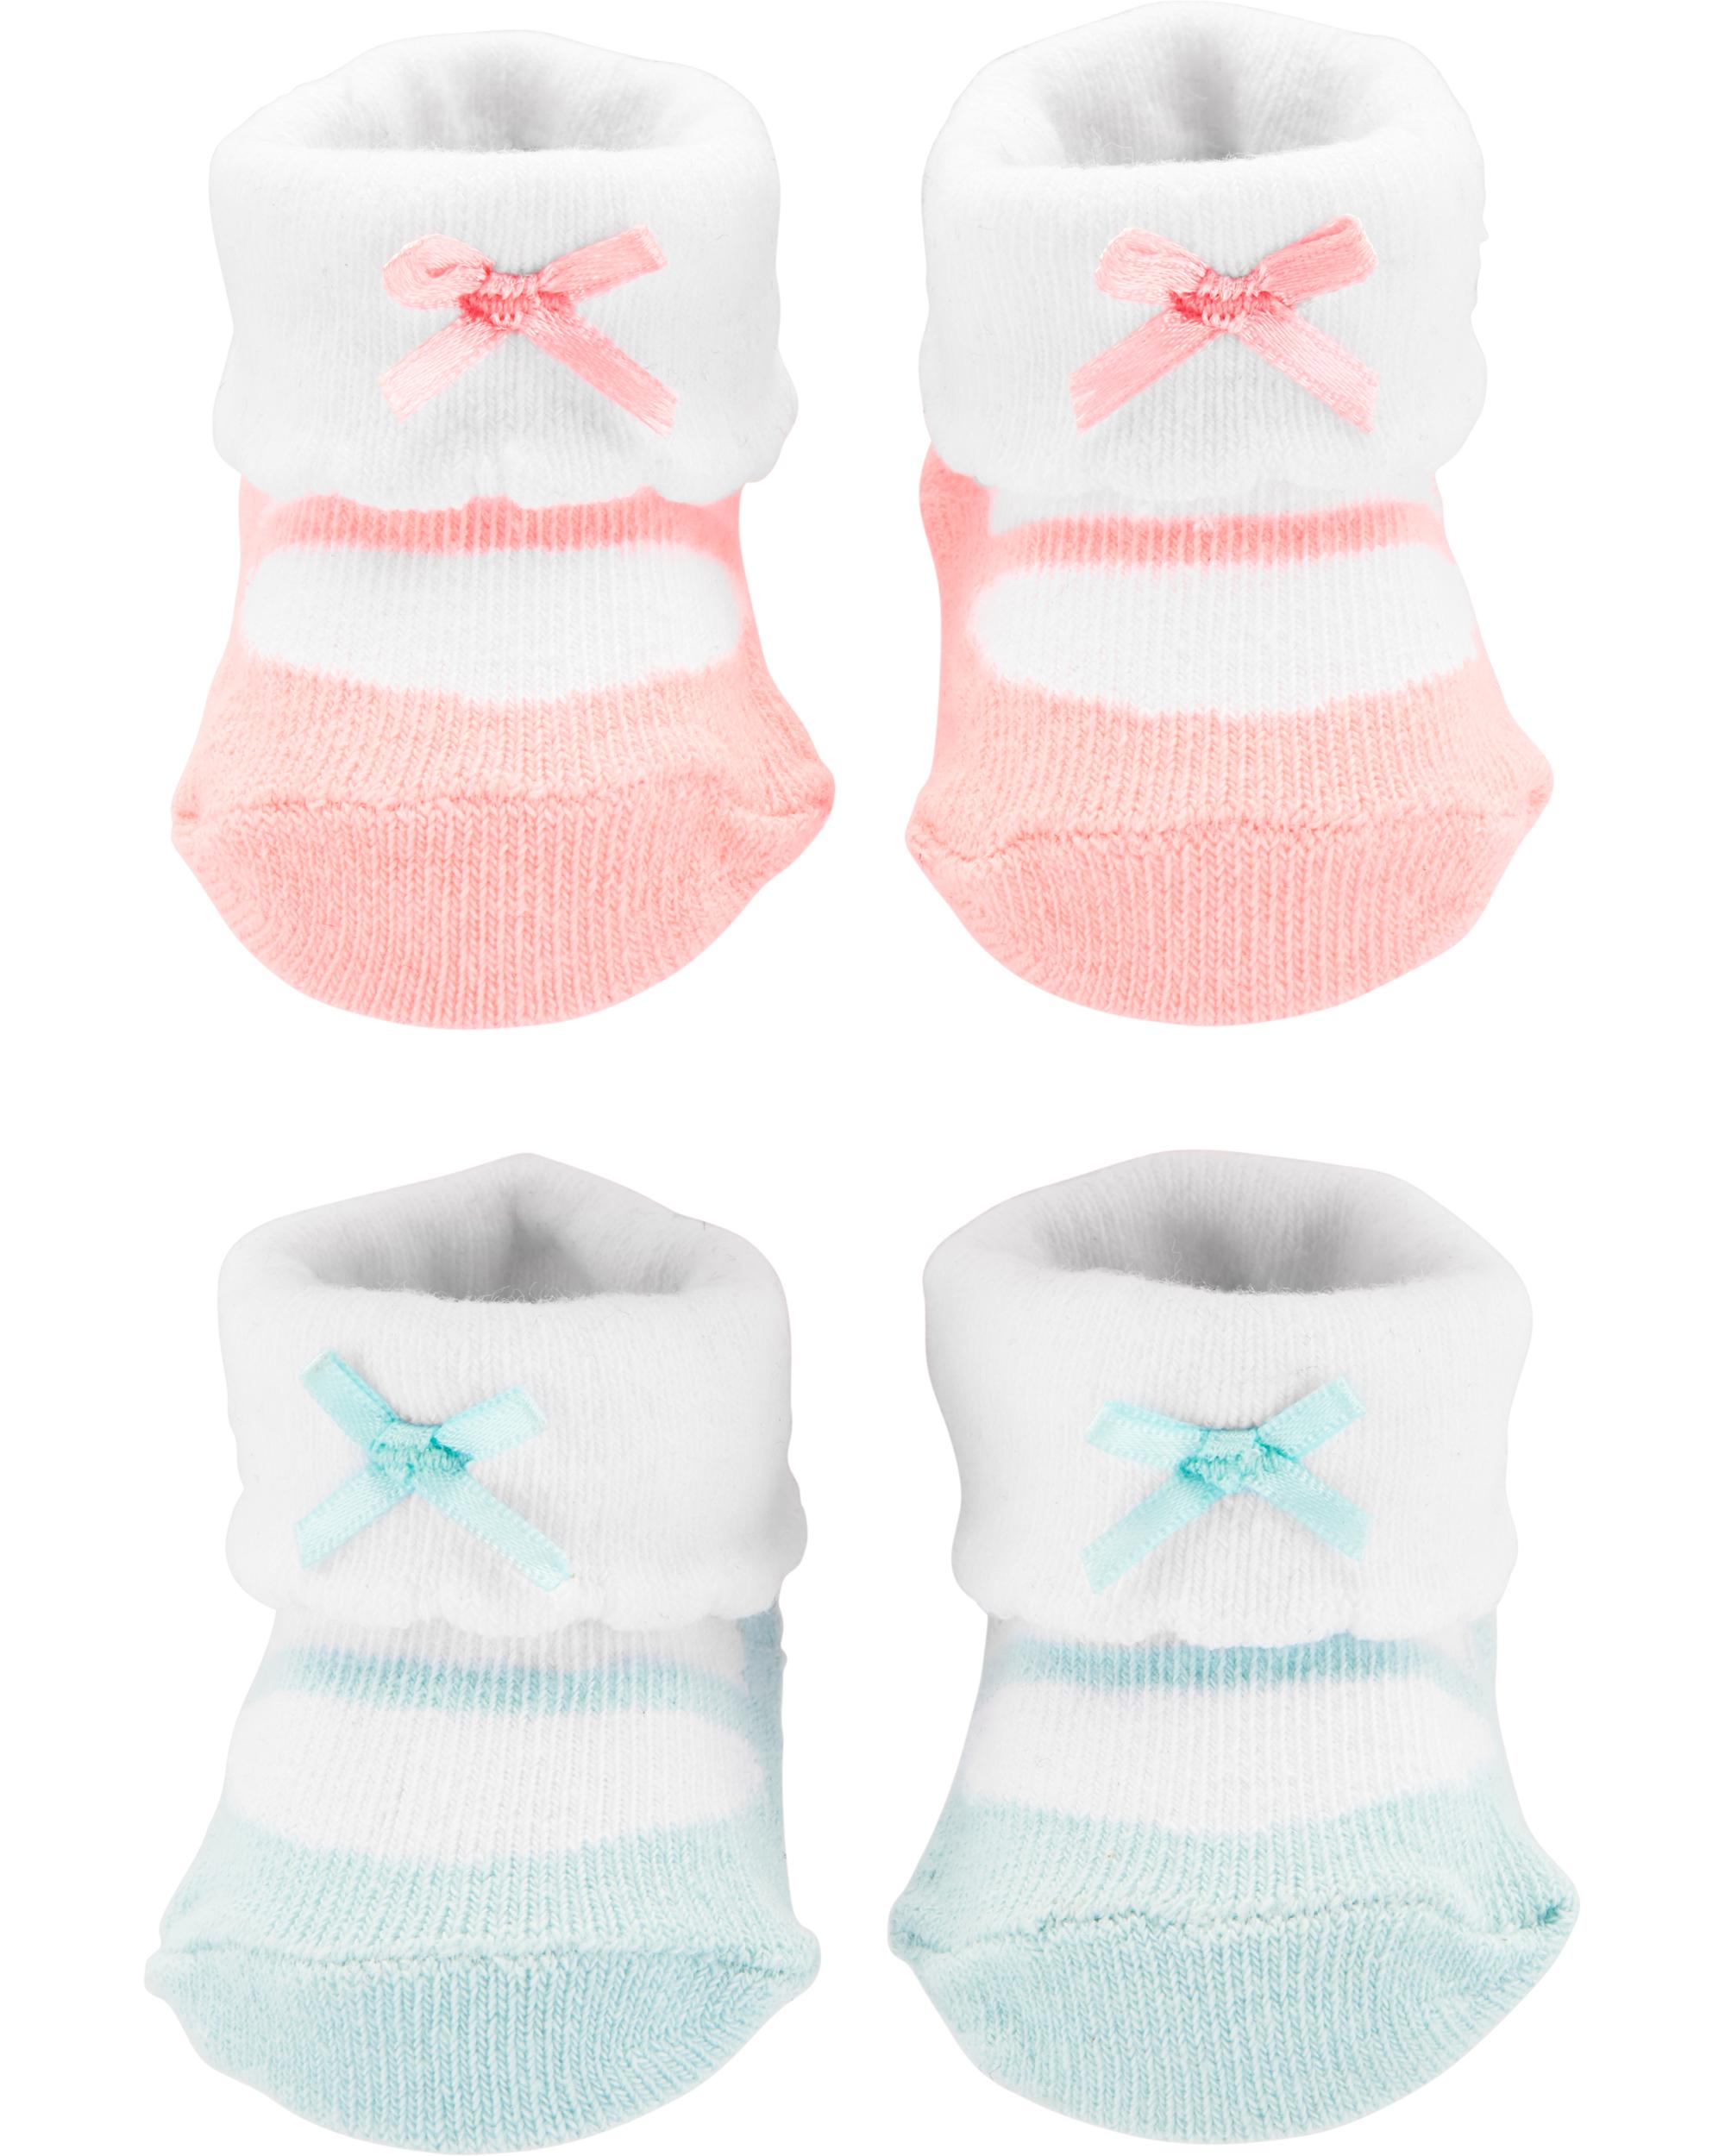 Sameno Baby Christmas Layette Set,Newborn Infant Baby Girls Boys Letter Floral Romper Jumpsuit Pants Hat Outfits Set